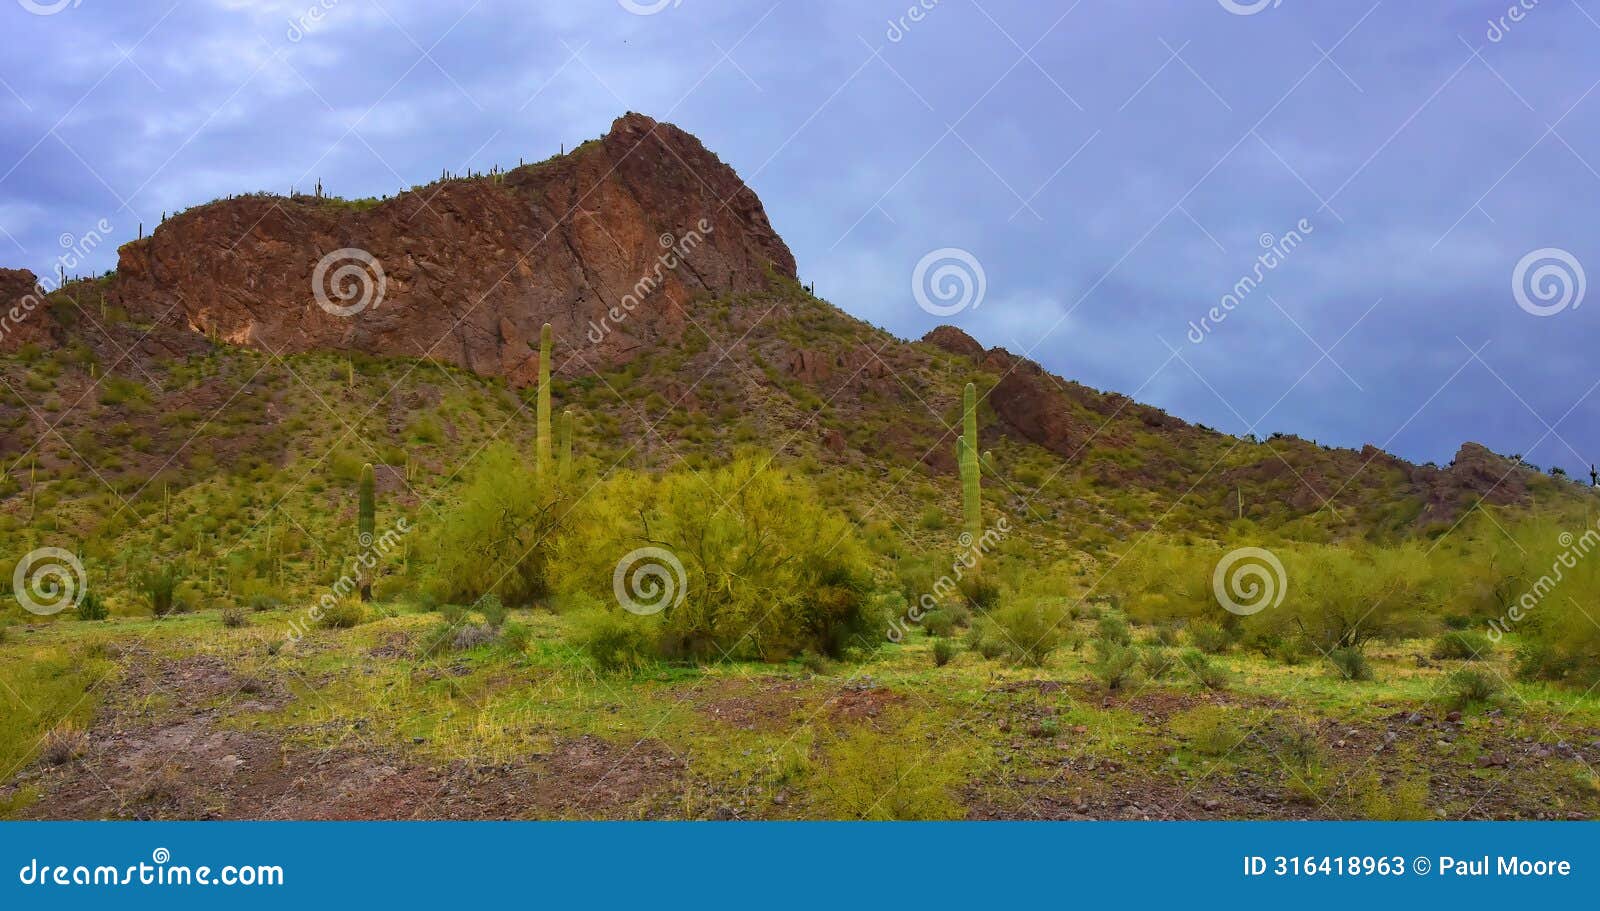 sonora desert arizona picacho peak state park